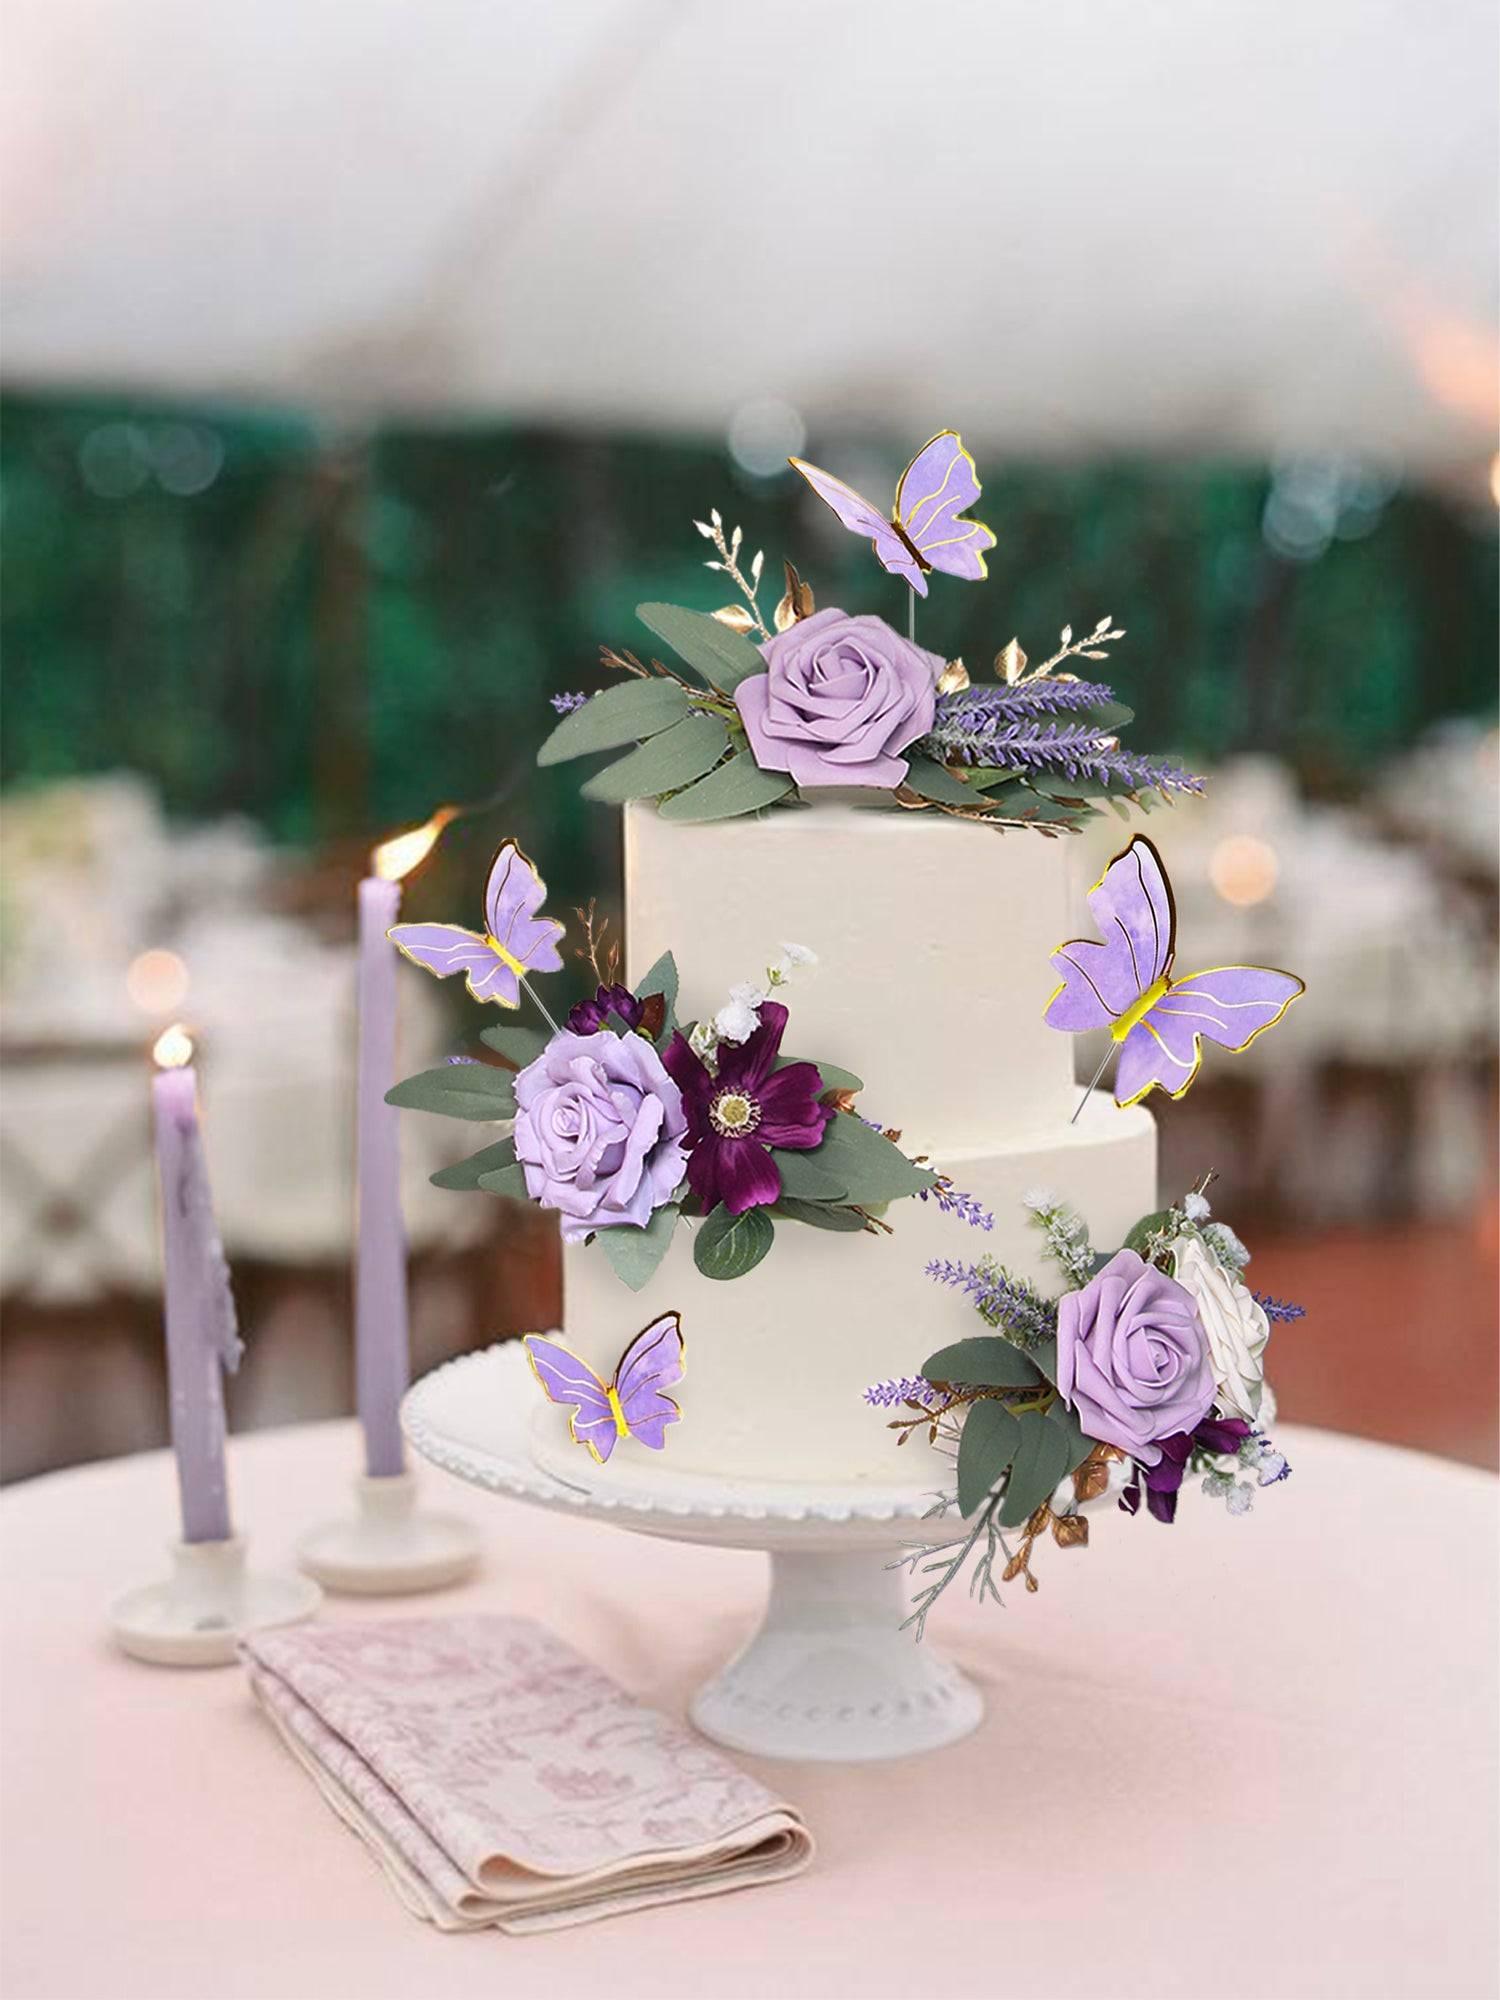 Pastel Purple Flowers & Butterfly Cake Decorating Set - Rinlong Flower